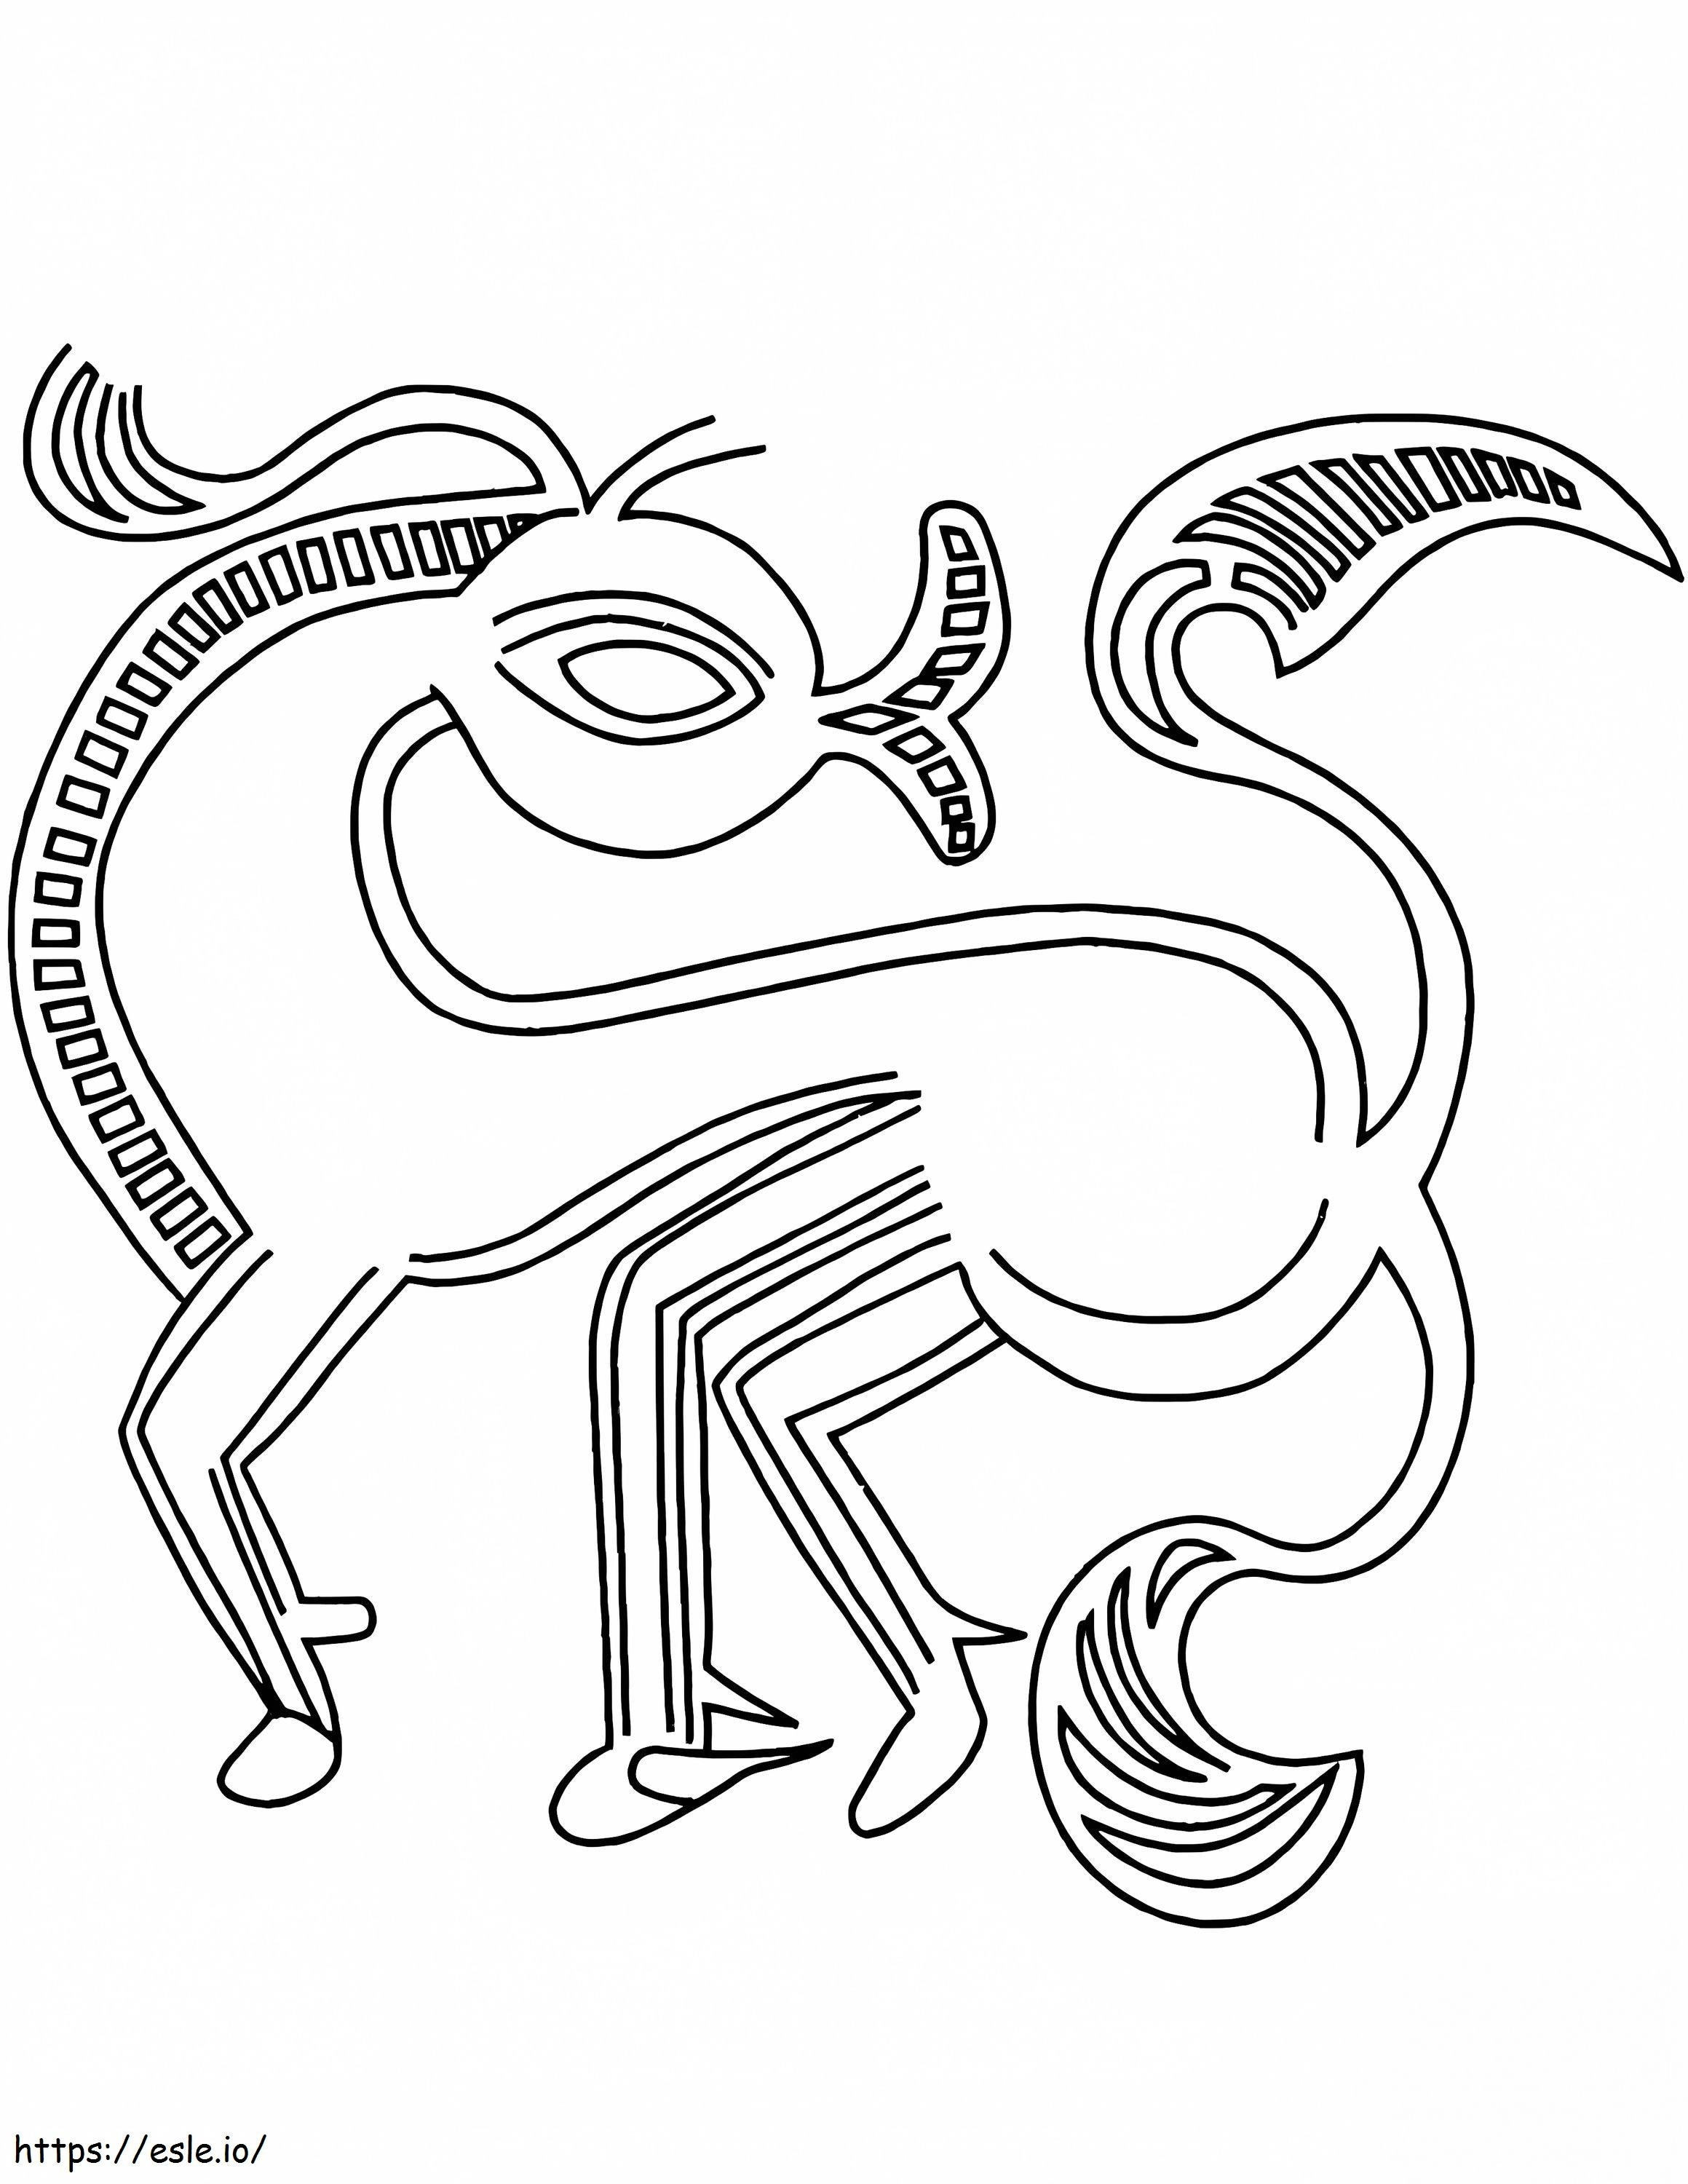 Desenho de Cavalo Celta para colorir